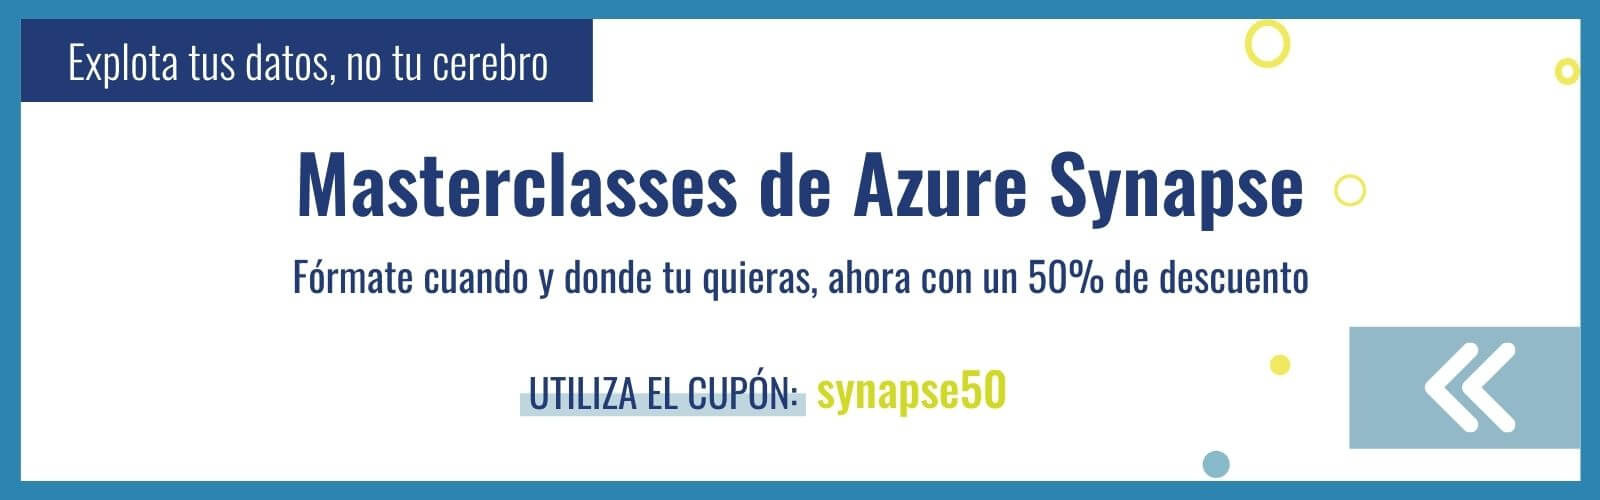 Masterclasses de Azure Synapse - Microsoft